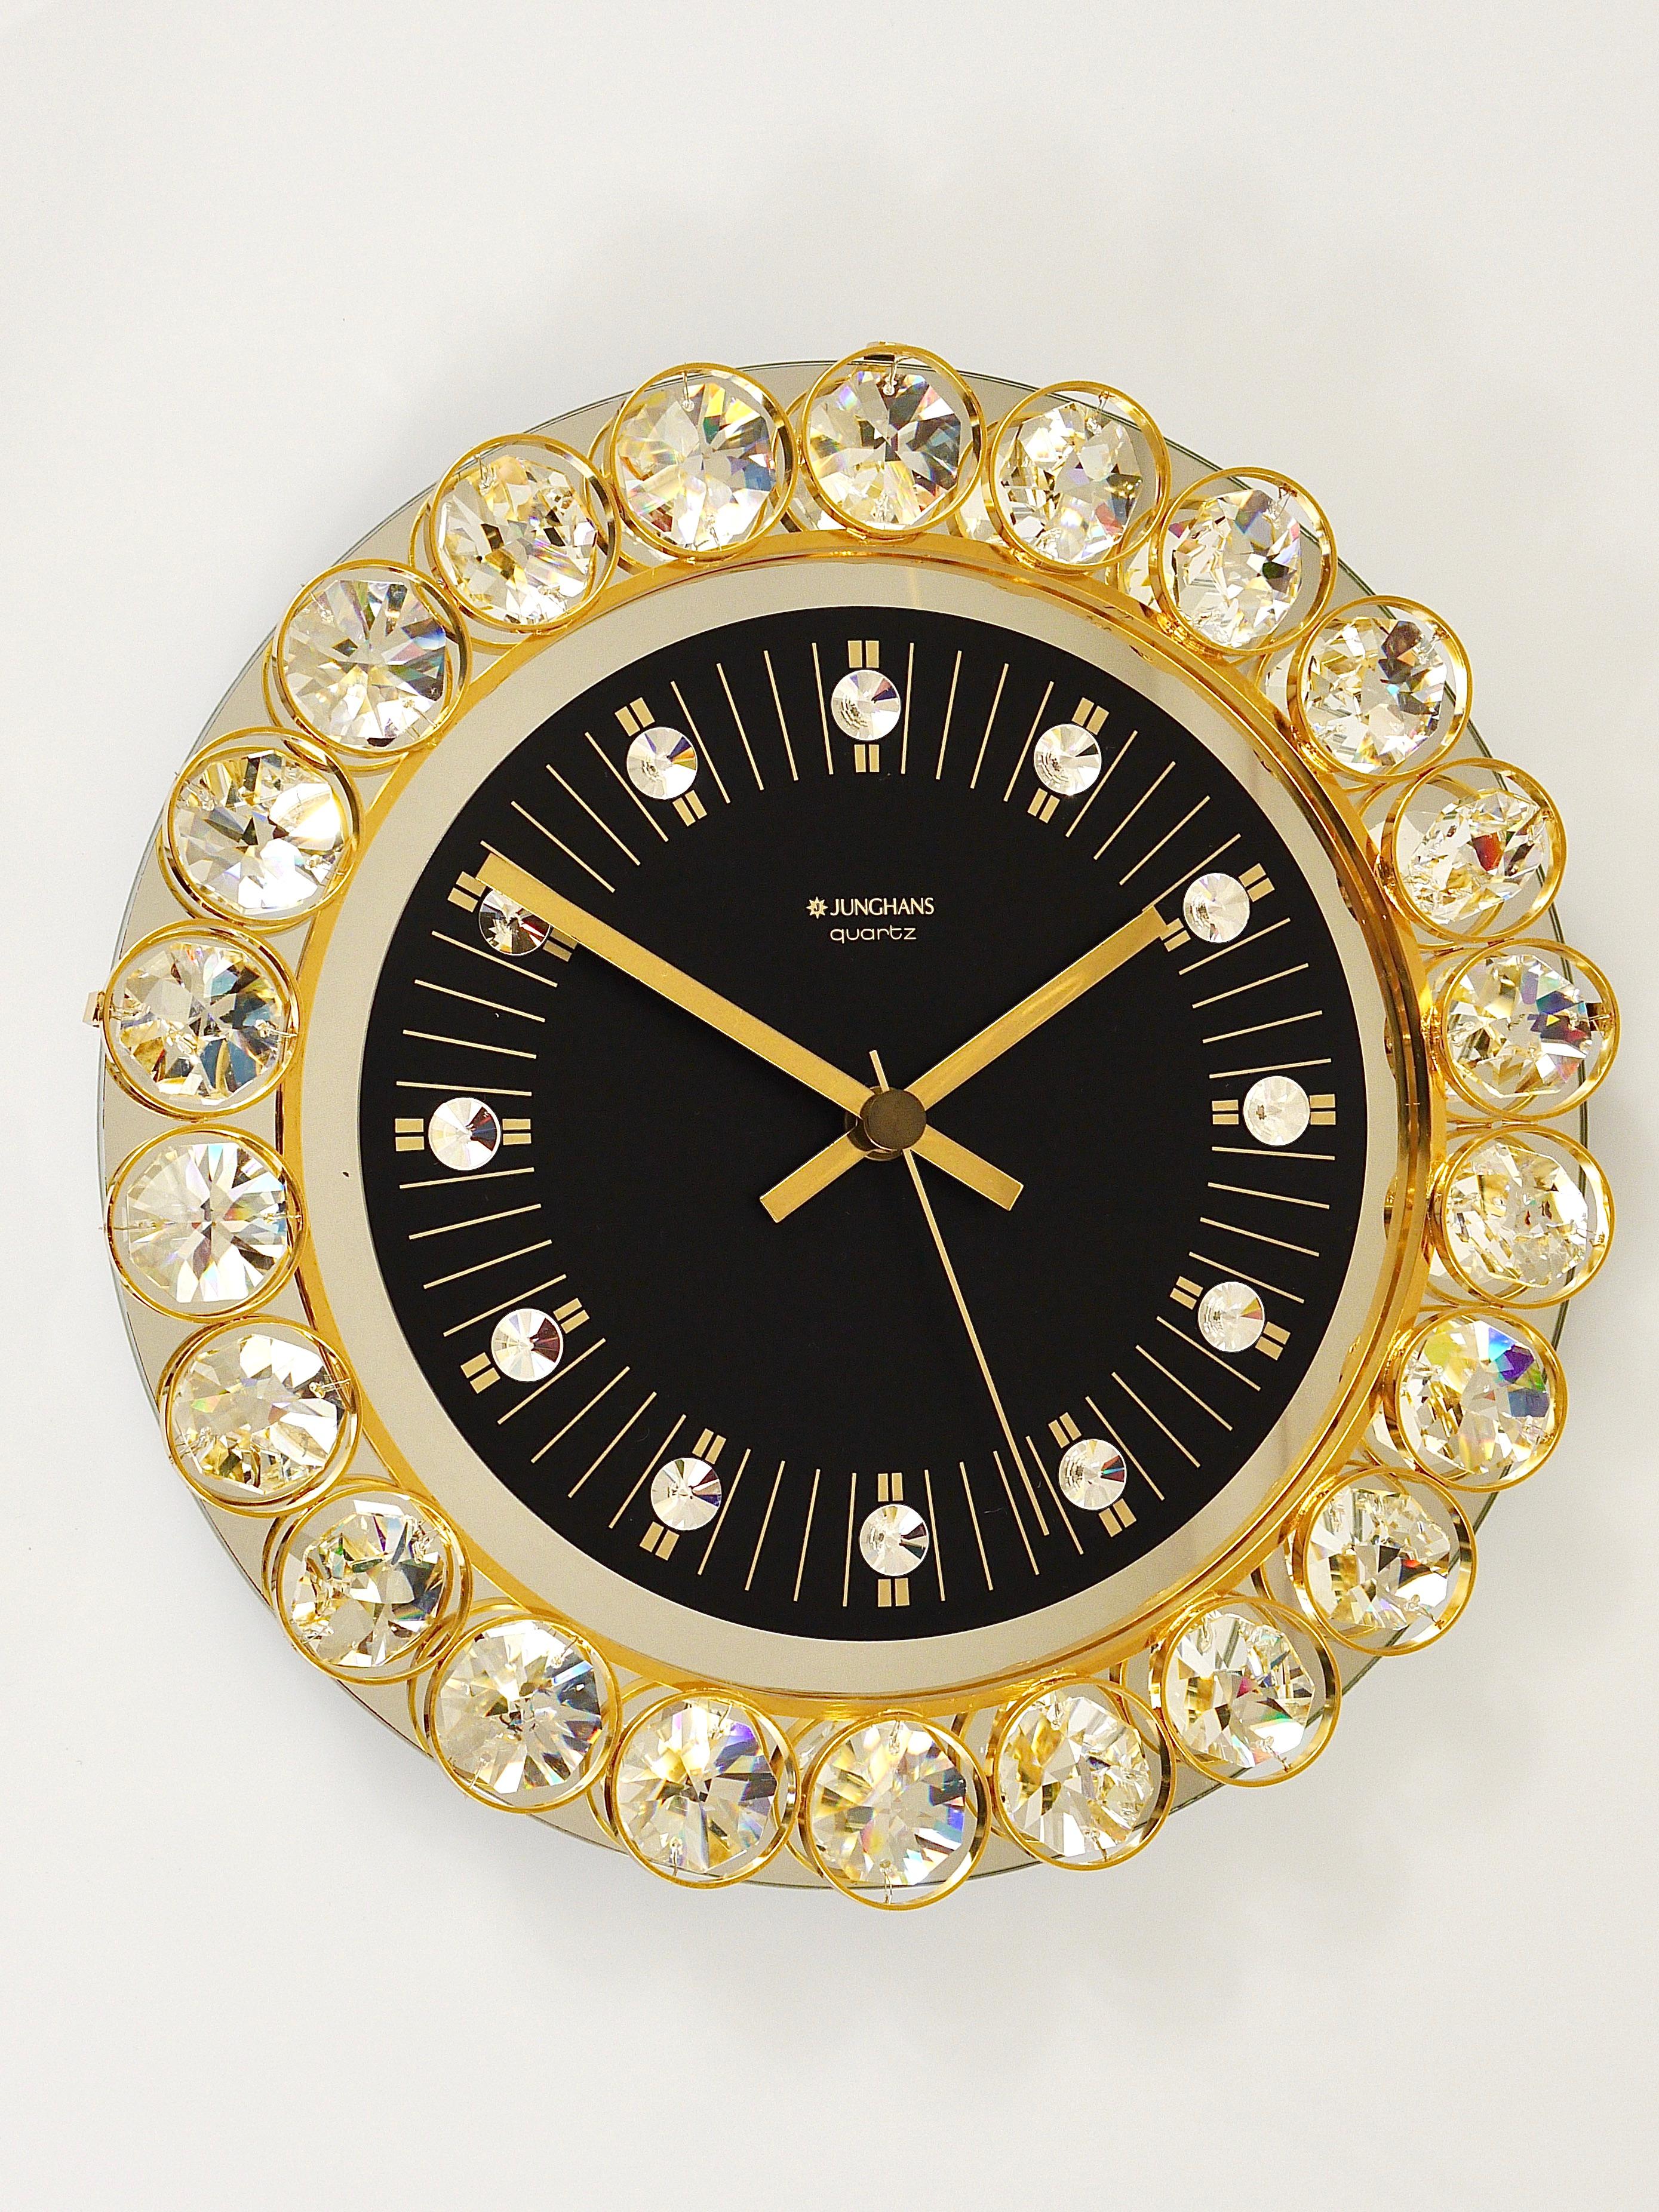 regency quartz watch